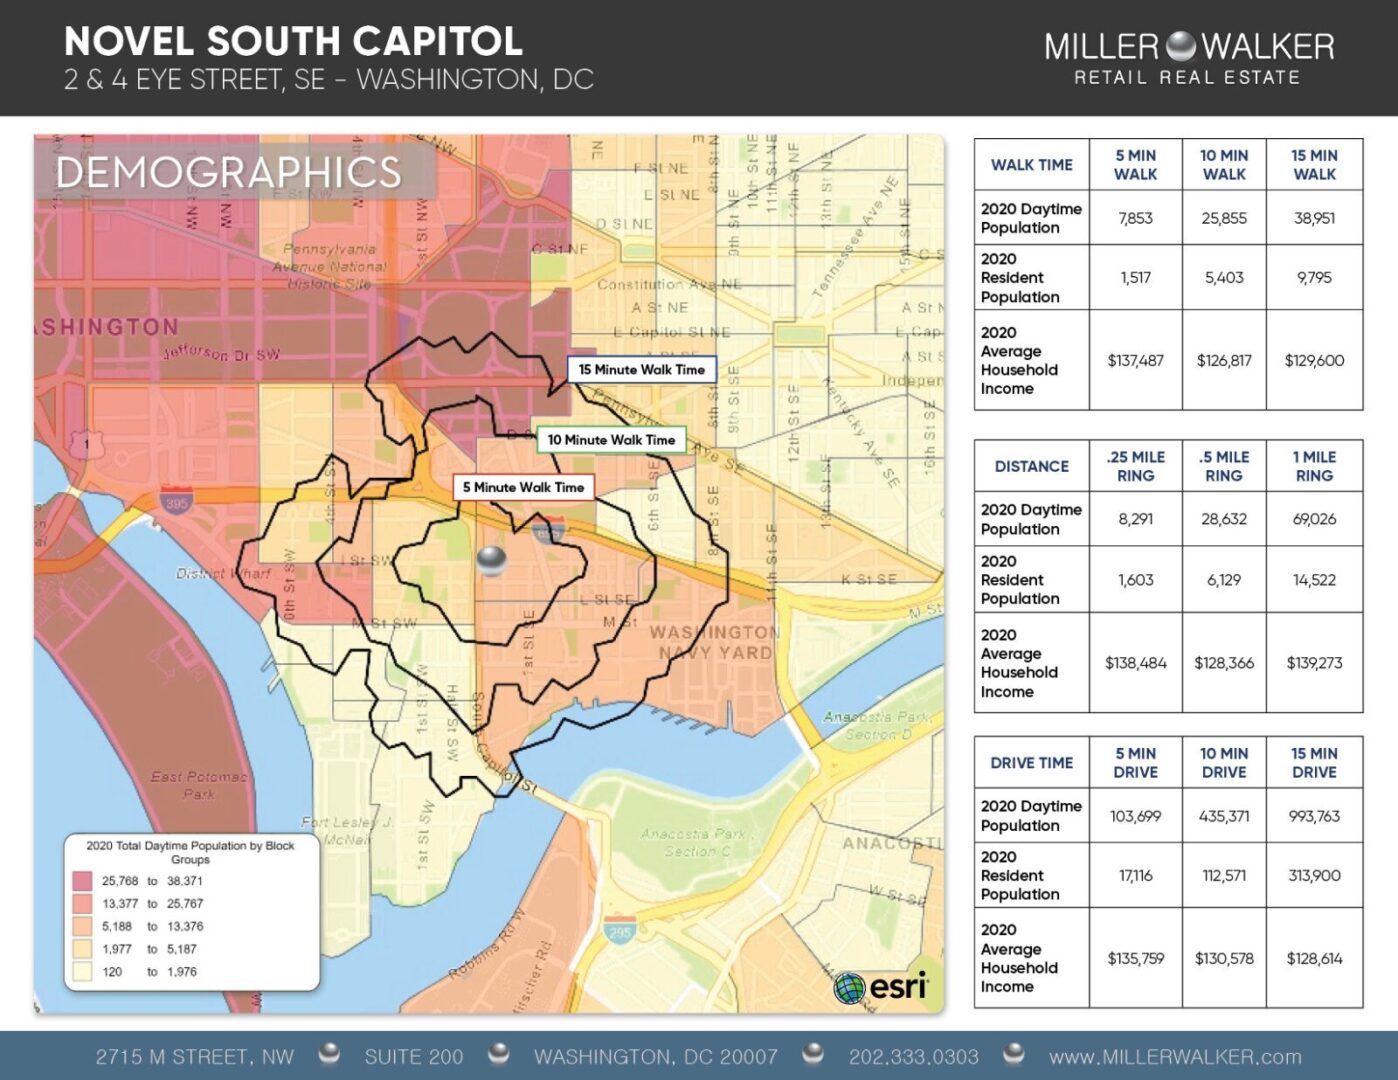 Novel South Capitol 2 and 4 eye street demographics near Navy Yard walk time income